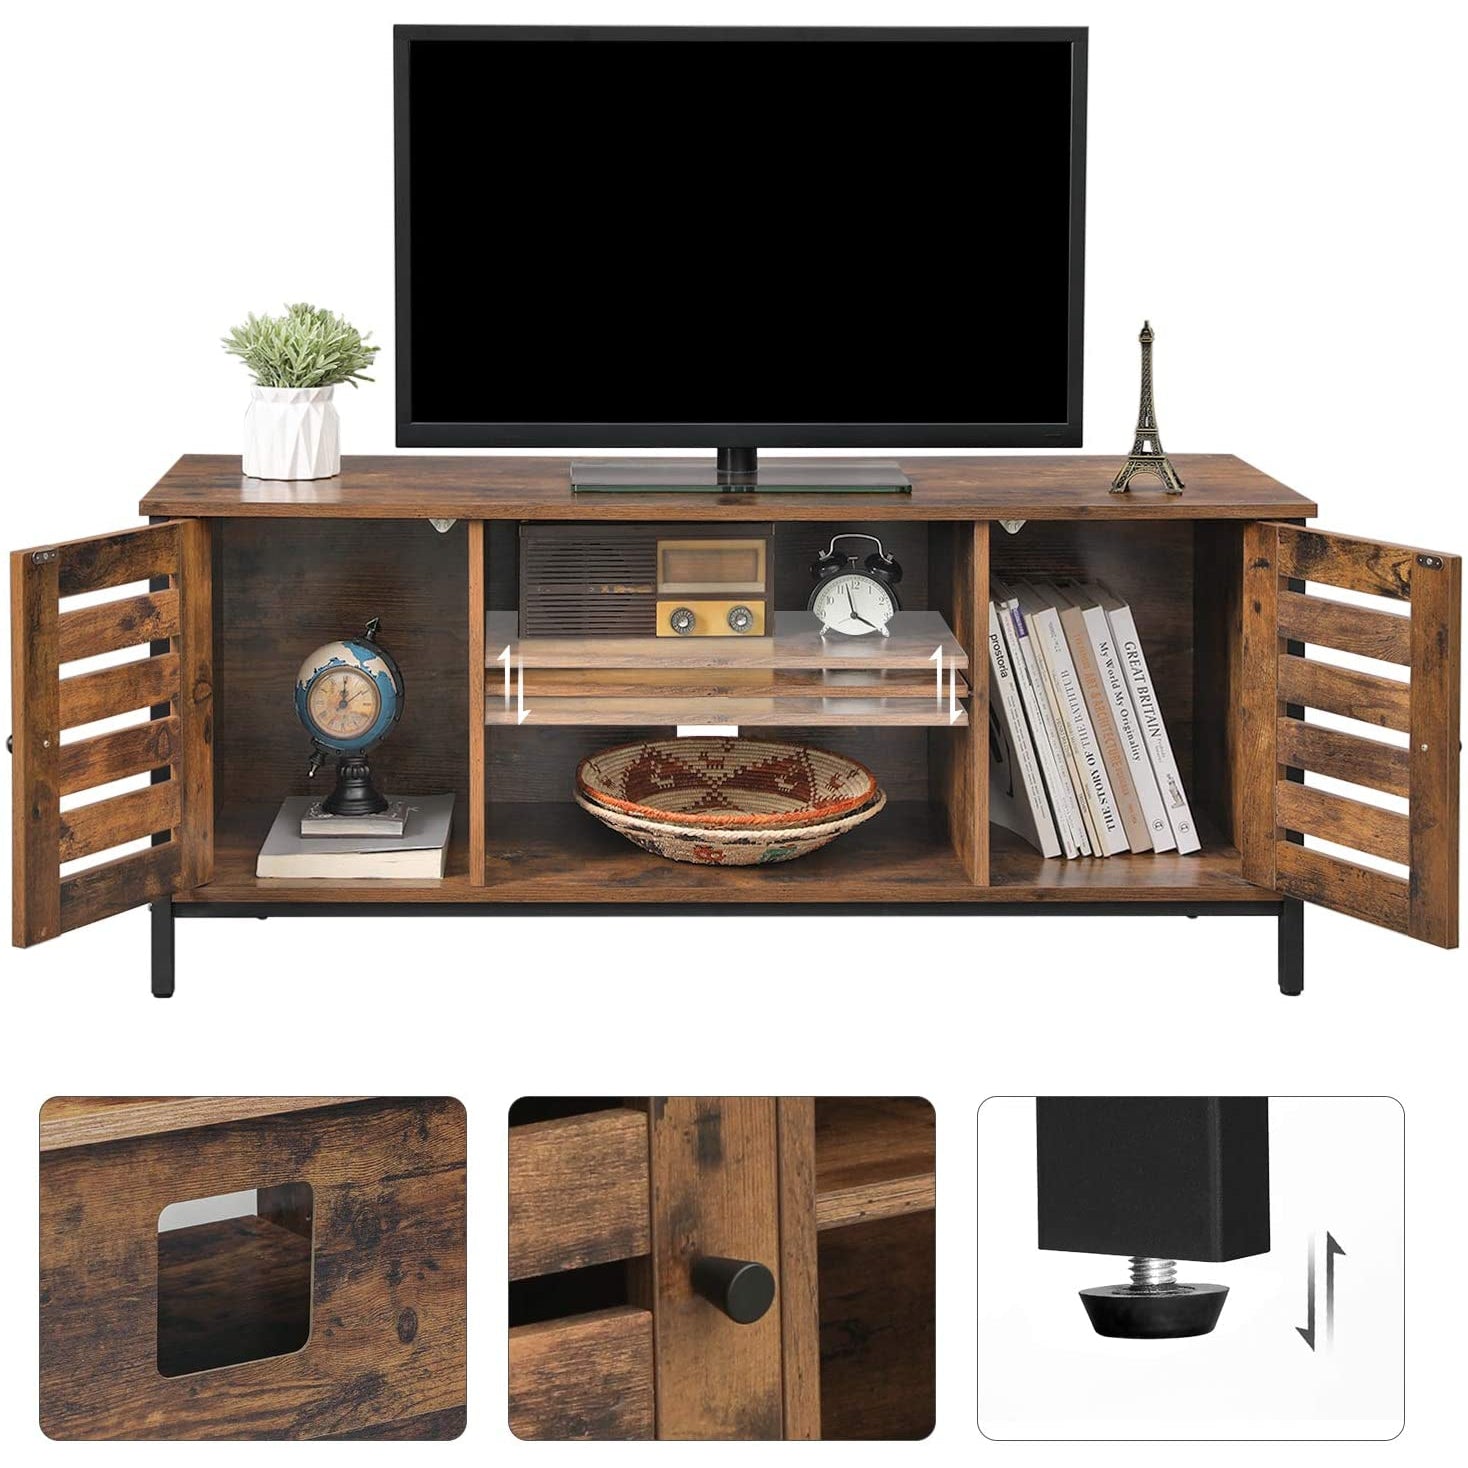 Nancy's Jefferson TV Furniture - Meuble TV - TV Lowboard - Table TV - Meubles TV - Vintage - Marron - Métal - 110 x 40 x 50